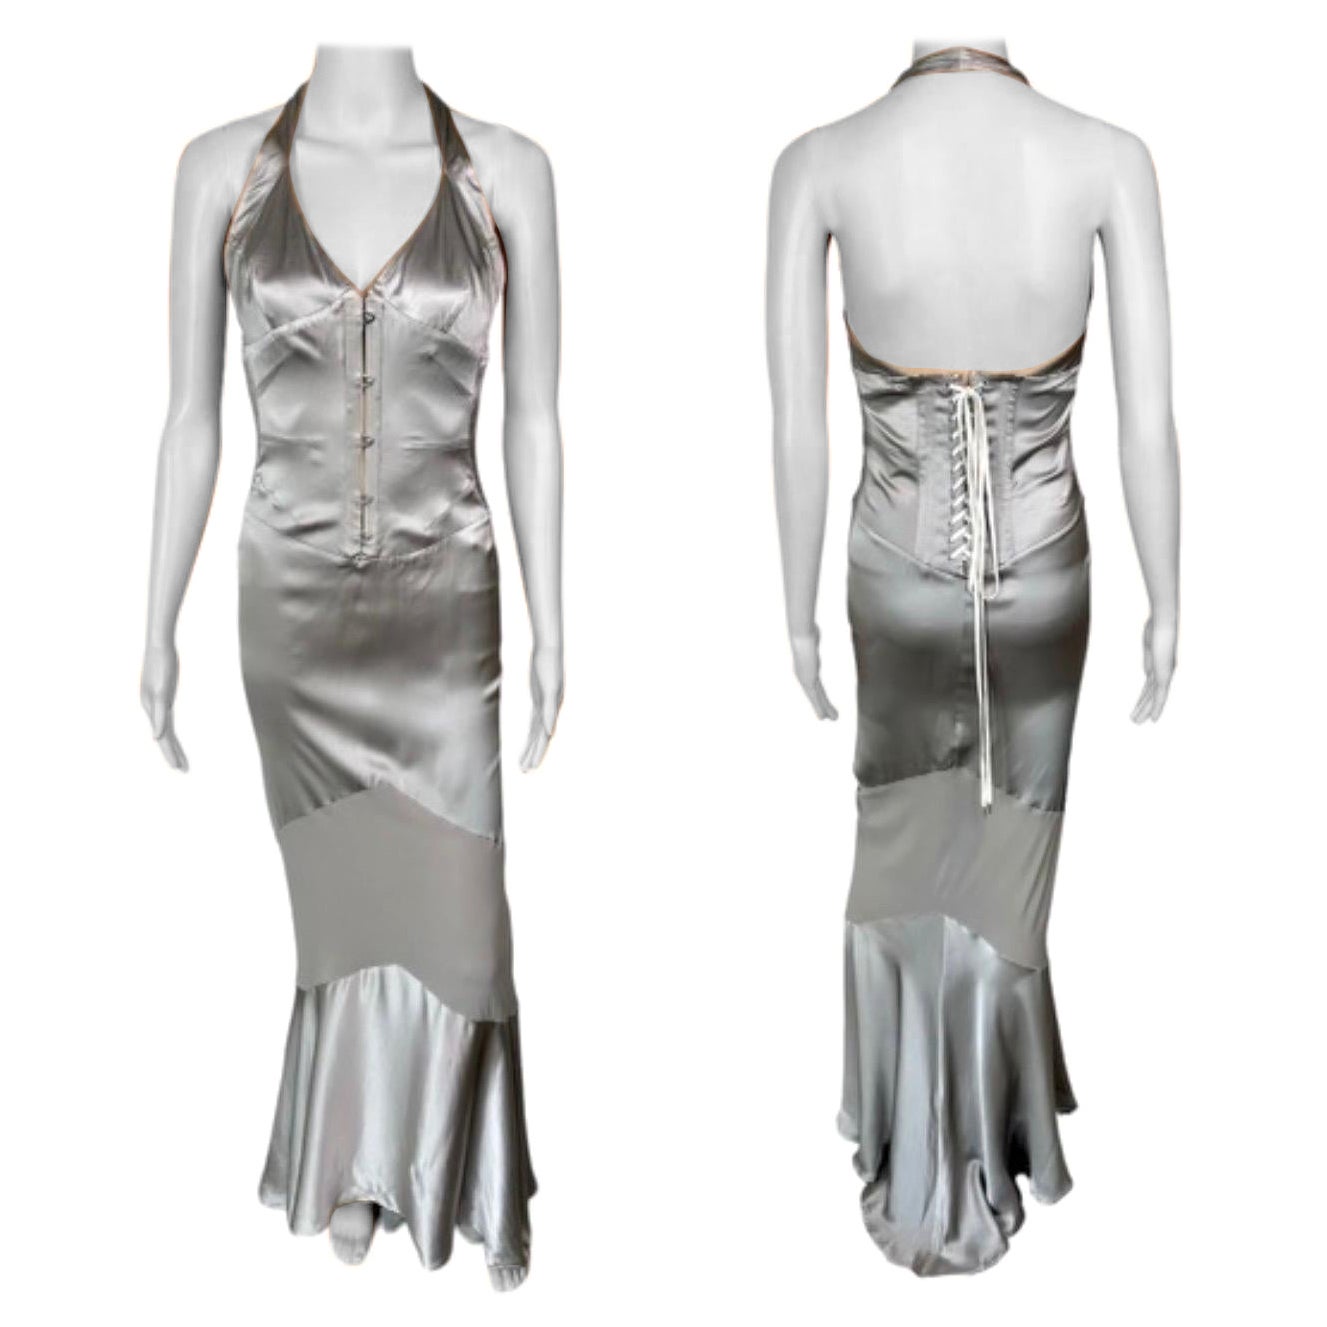 Roberto Cavalli S/S 2003 Corset Plunged Décolleté Silver Evening Dress Gown  For Sale